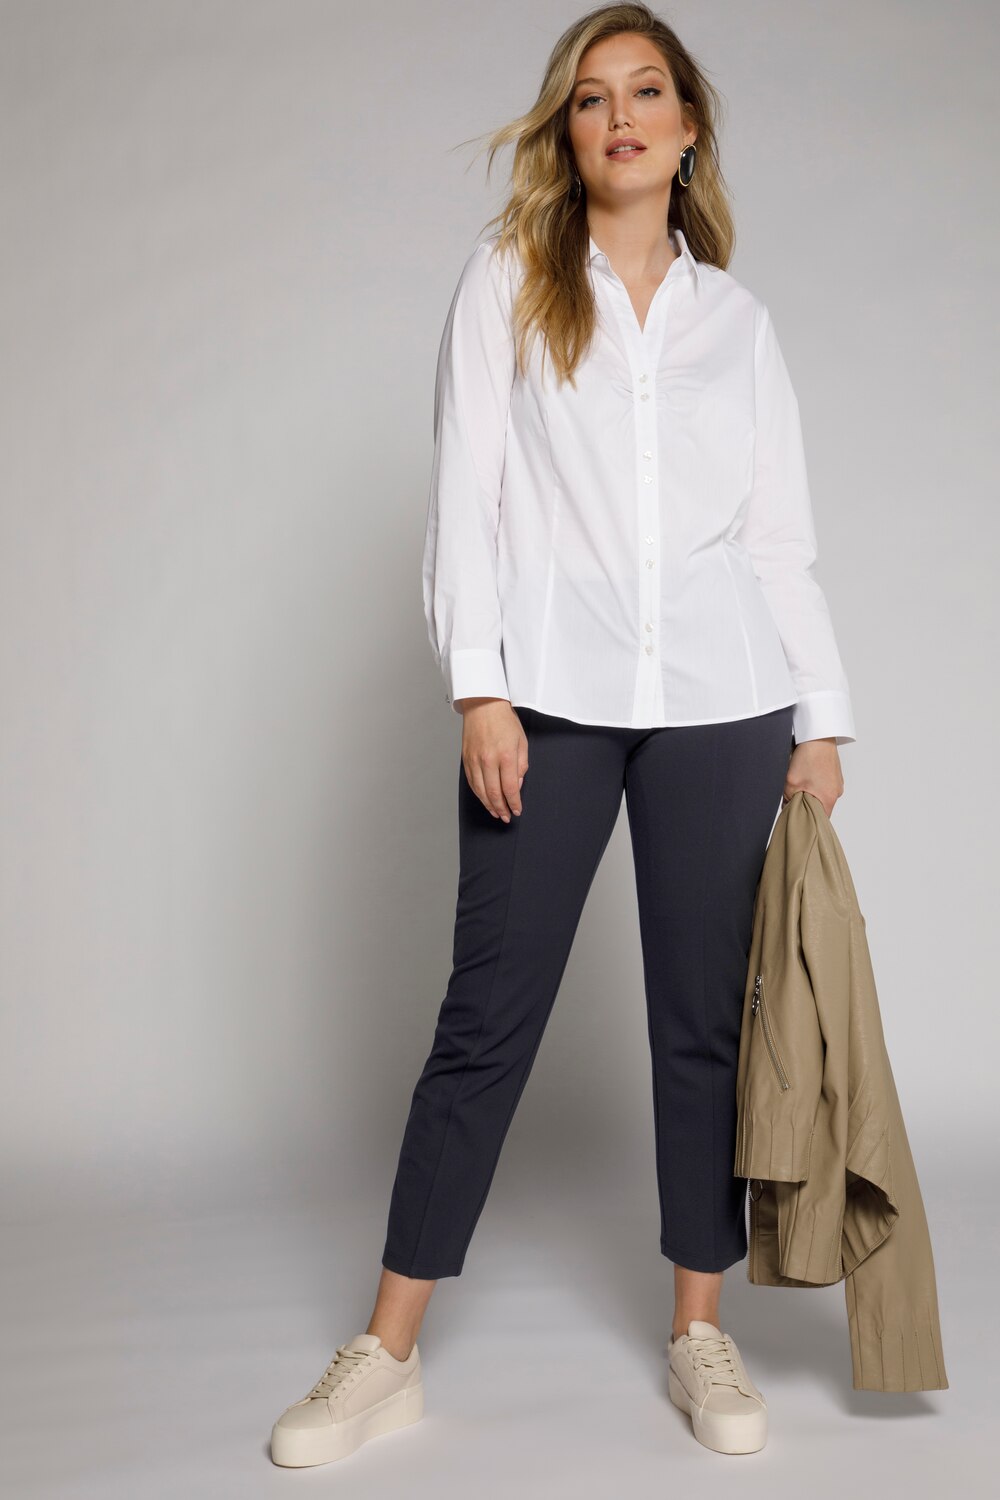 Grote Maten blouse, Dames, wit, Maat: 44, Katoen/Polyester, Ulla Popken